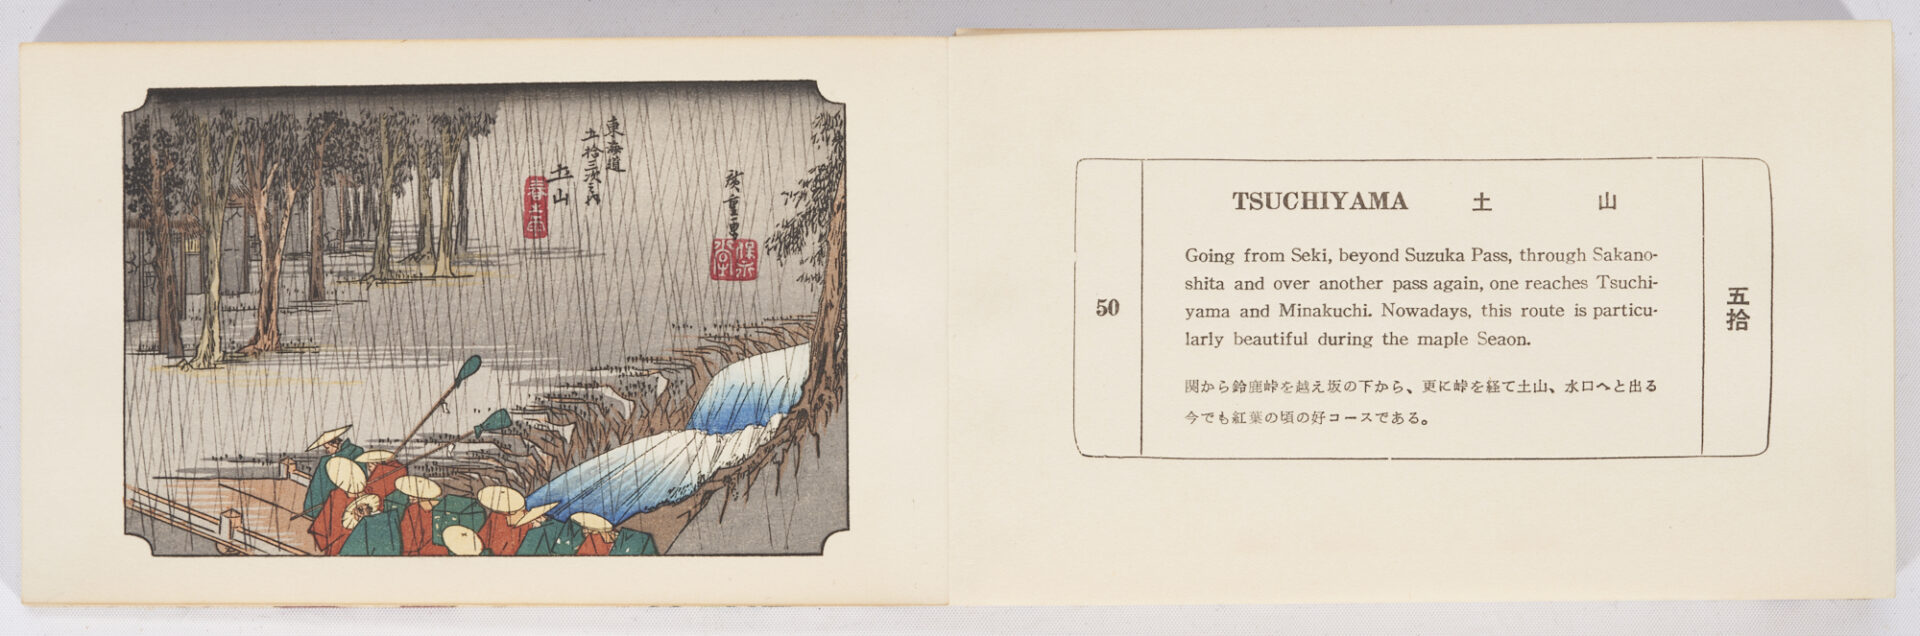 Lot 235: 2 Japanese Small Painted Screens & 1 Hiroshige Miniature Set, Total 3